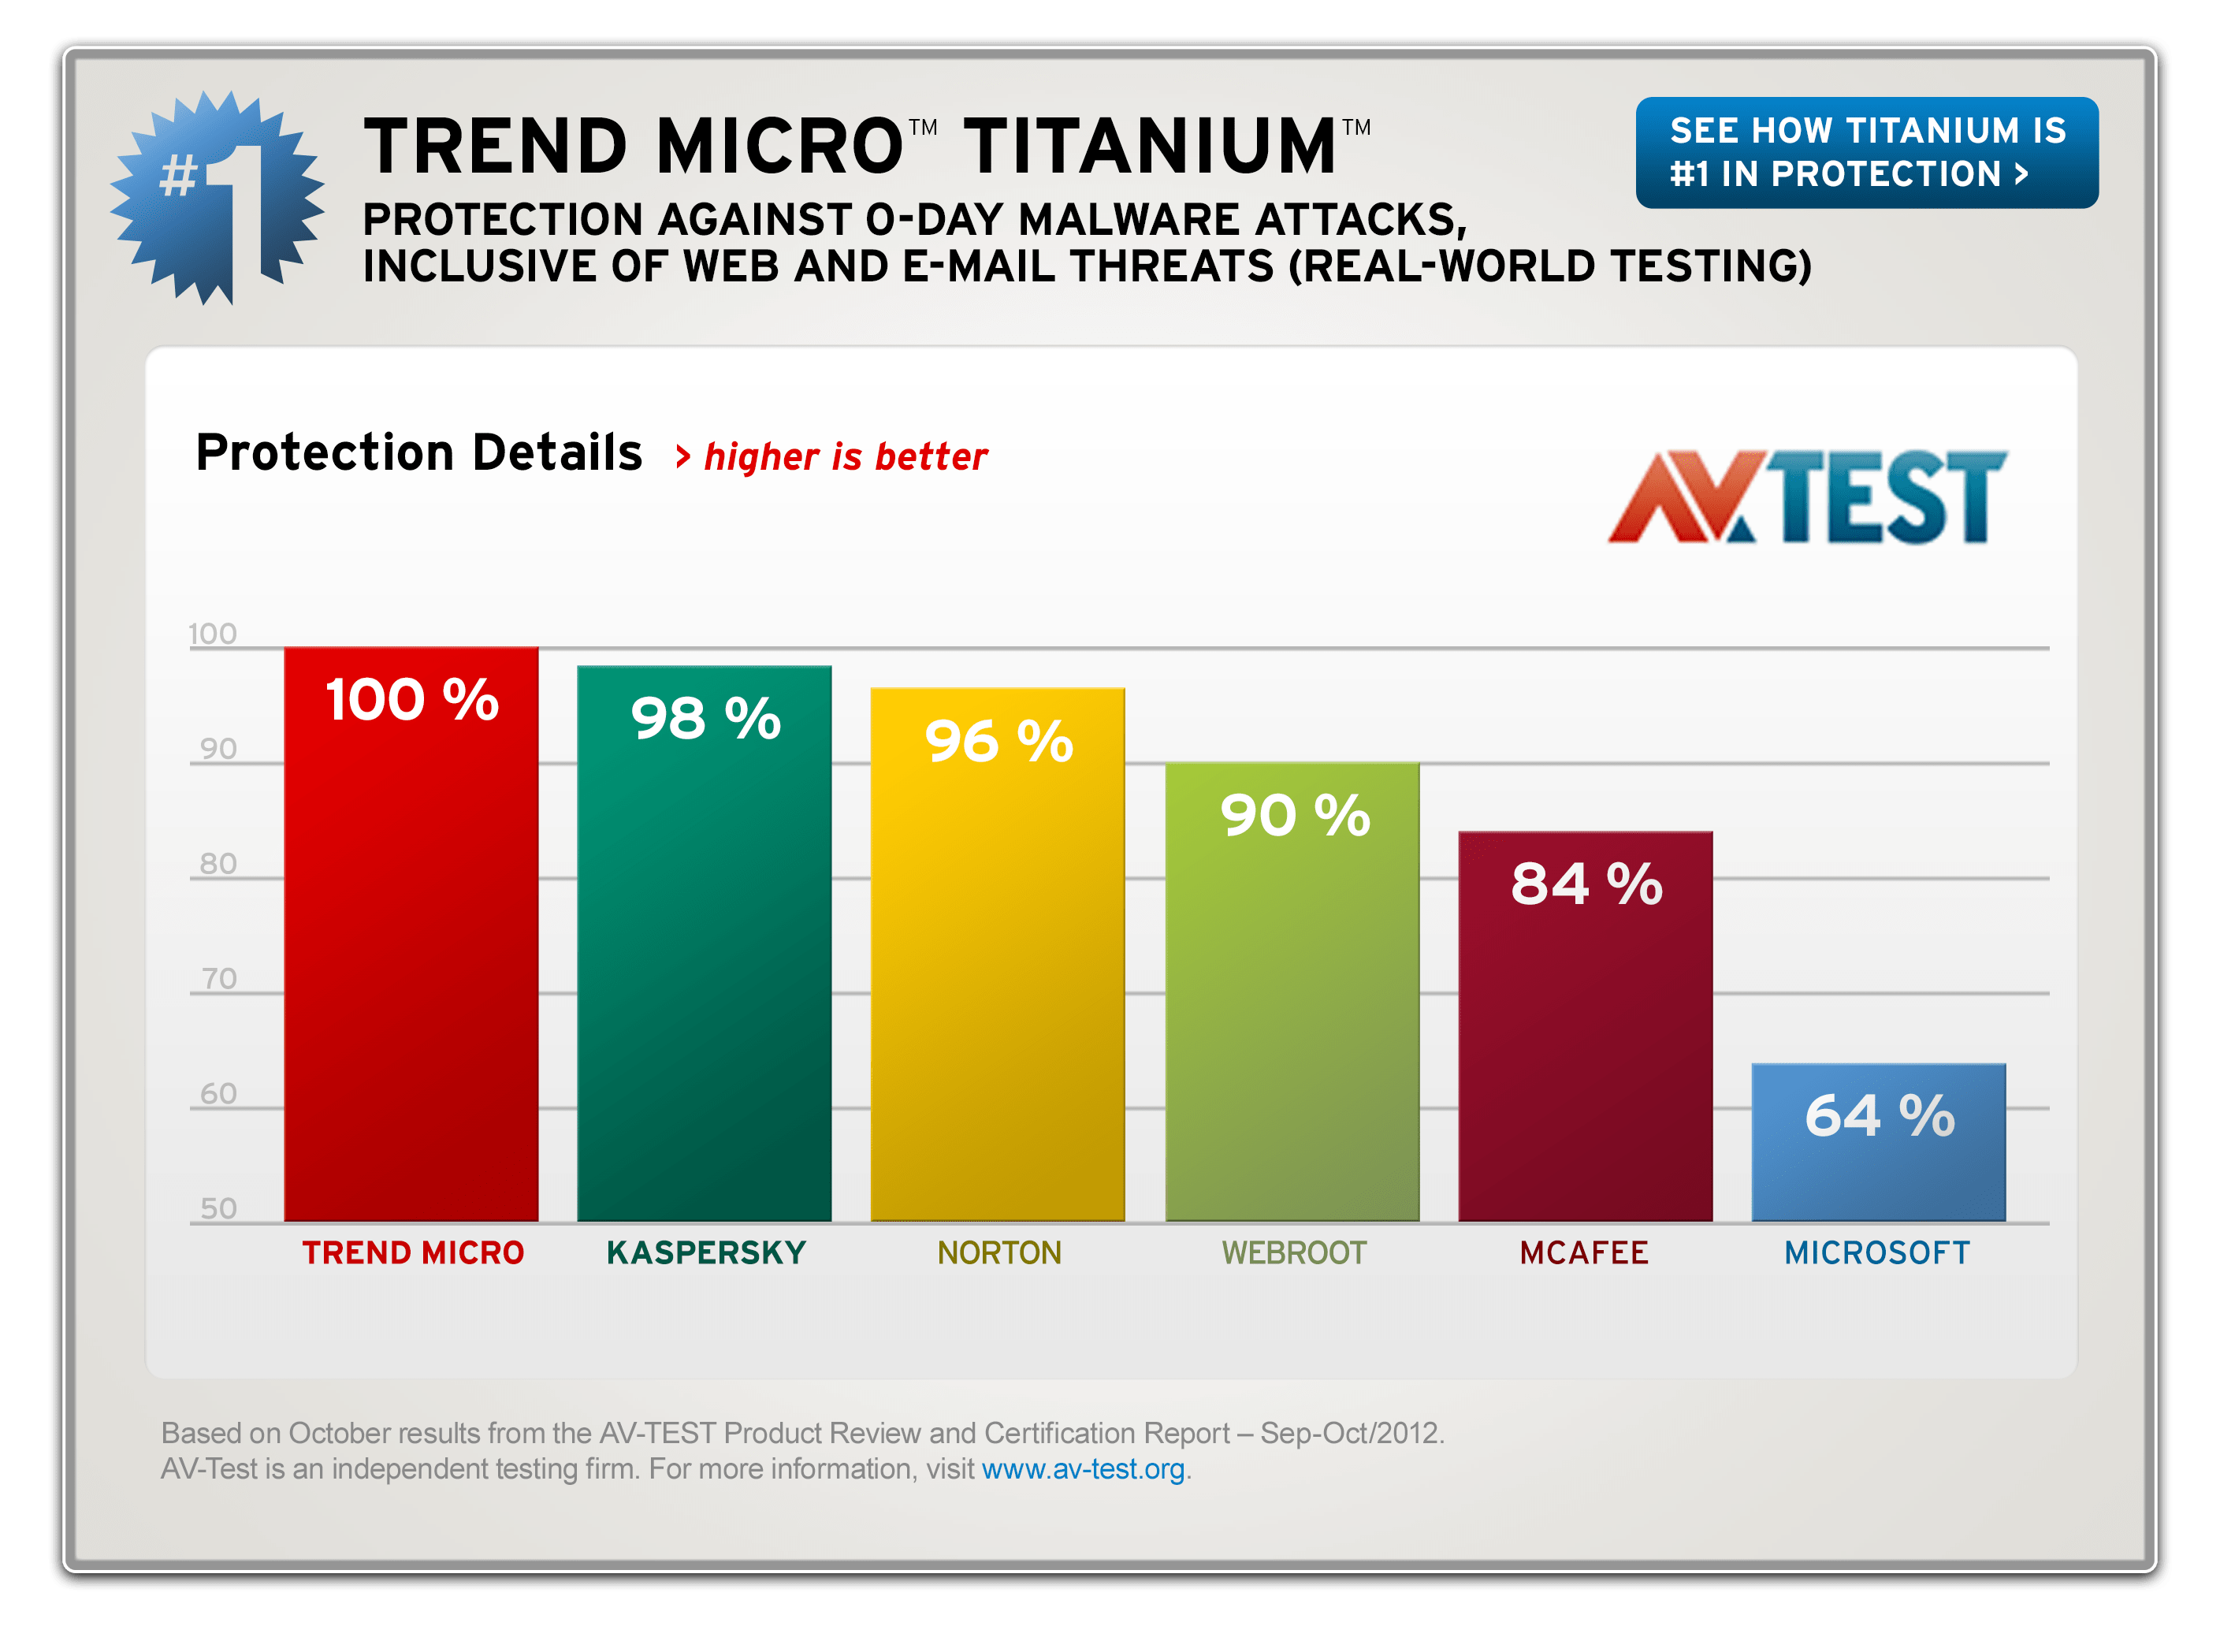 trend micro antivirus download